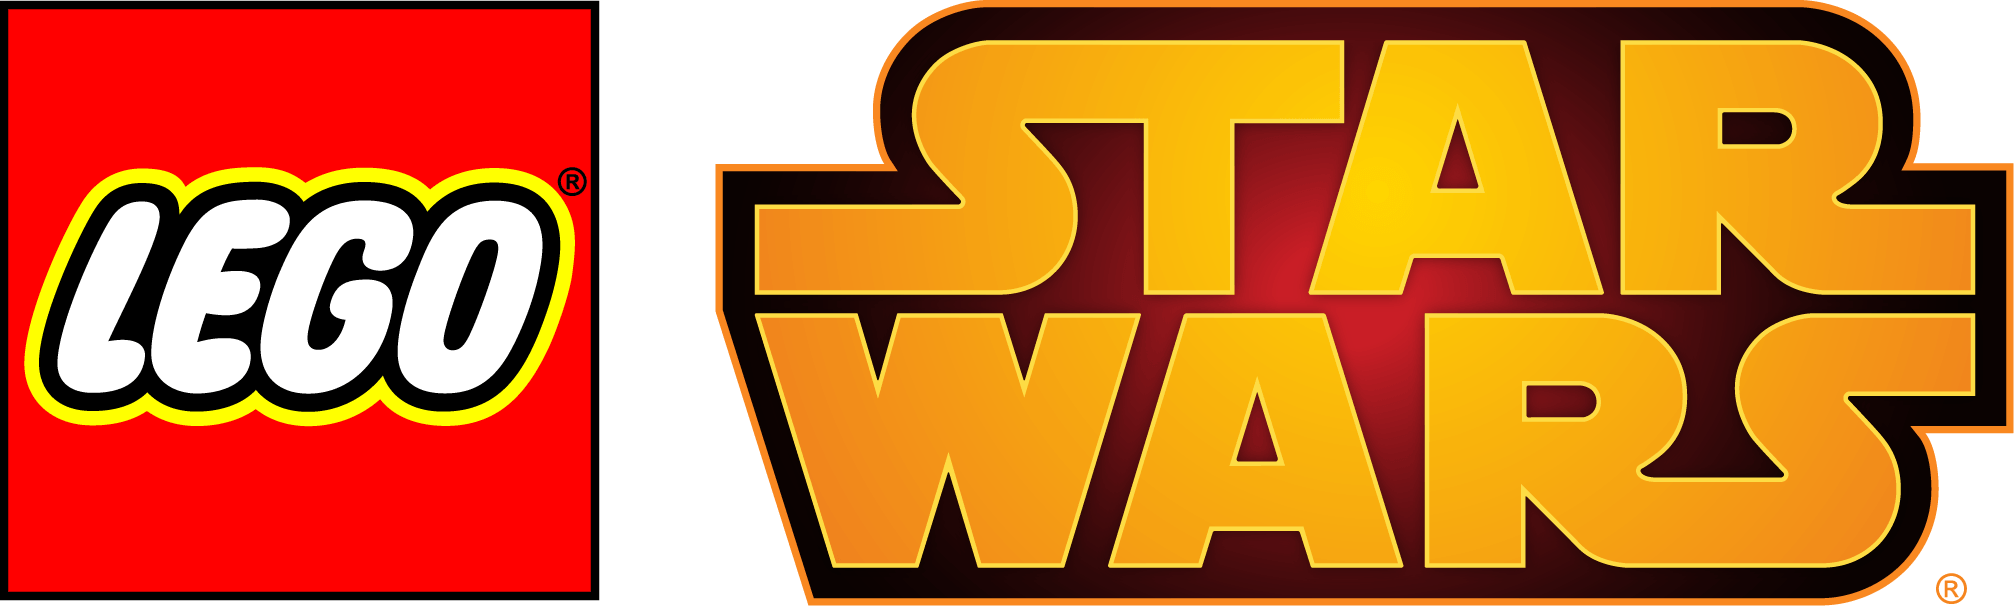 LEGO Star Wars Logo - File:Lego Star Wars logo.png - Wikimedia Commons